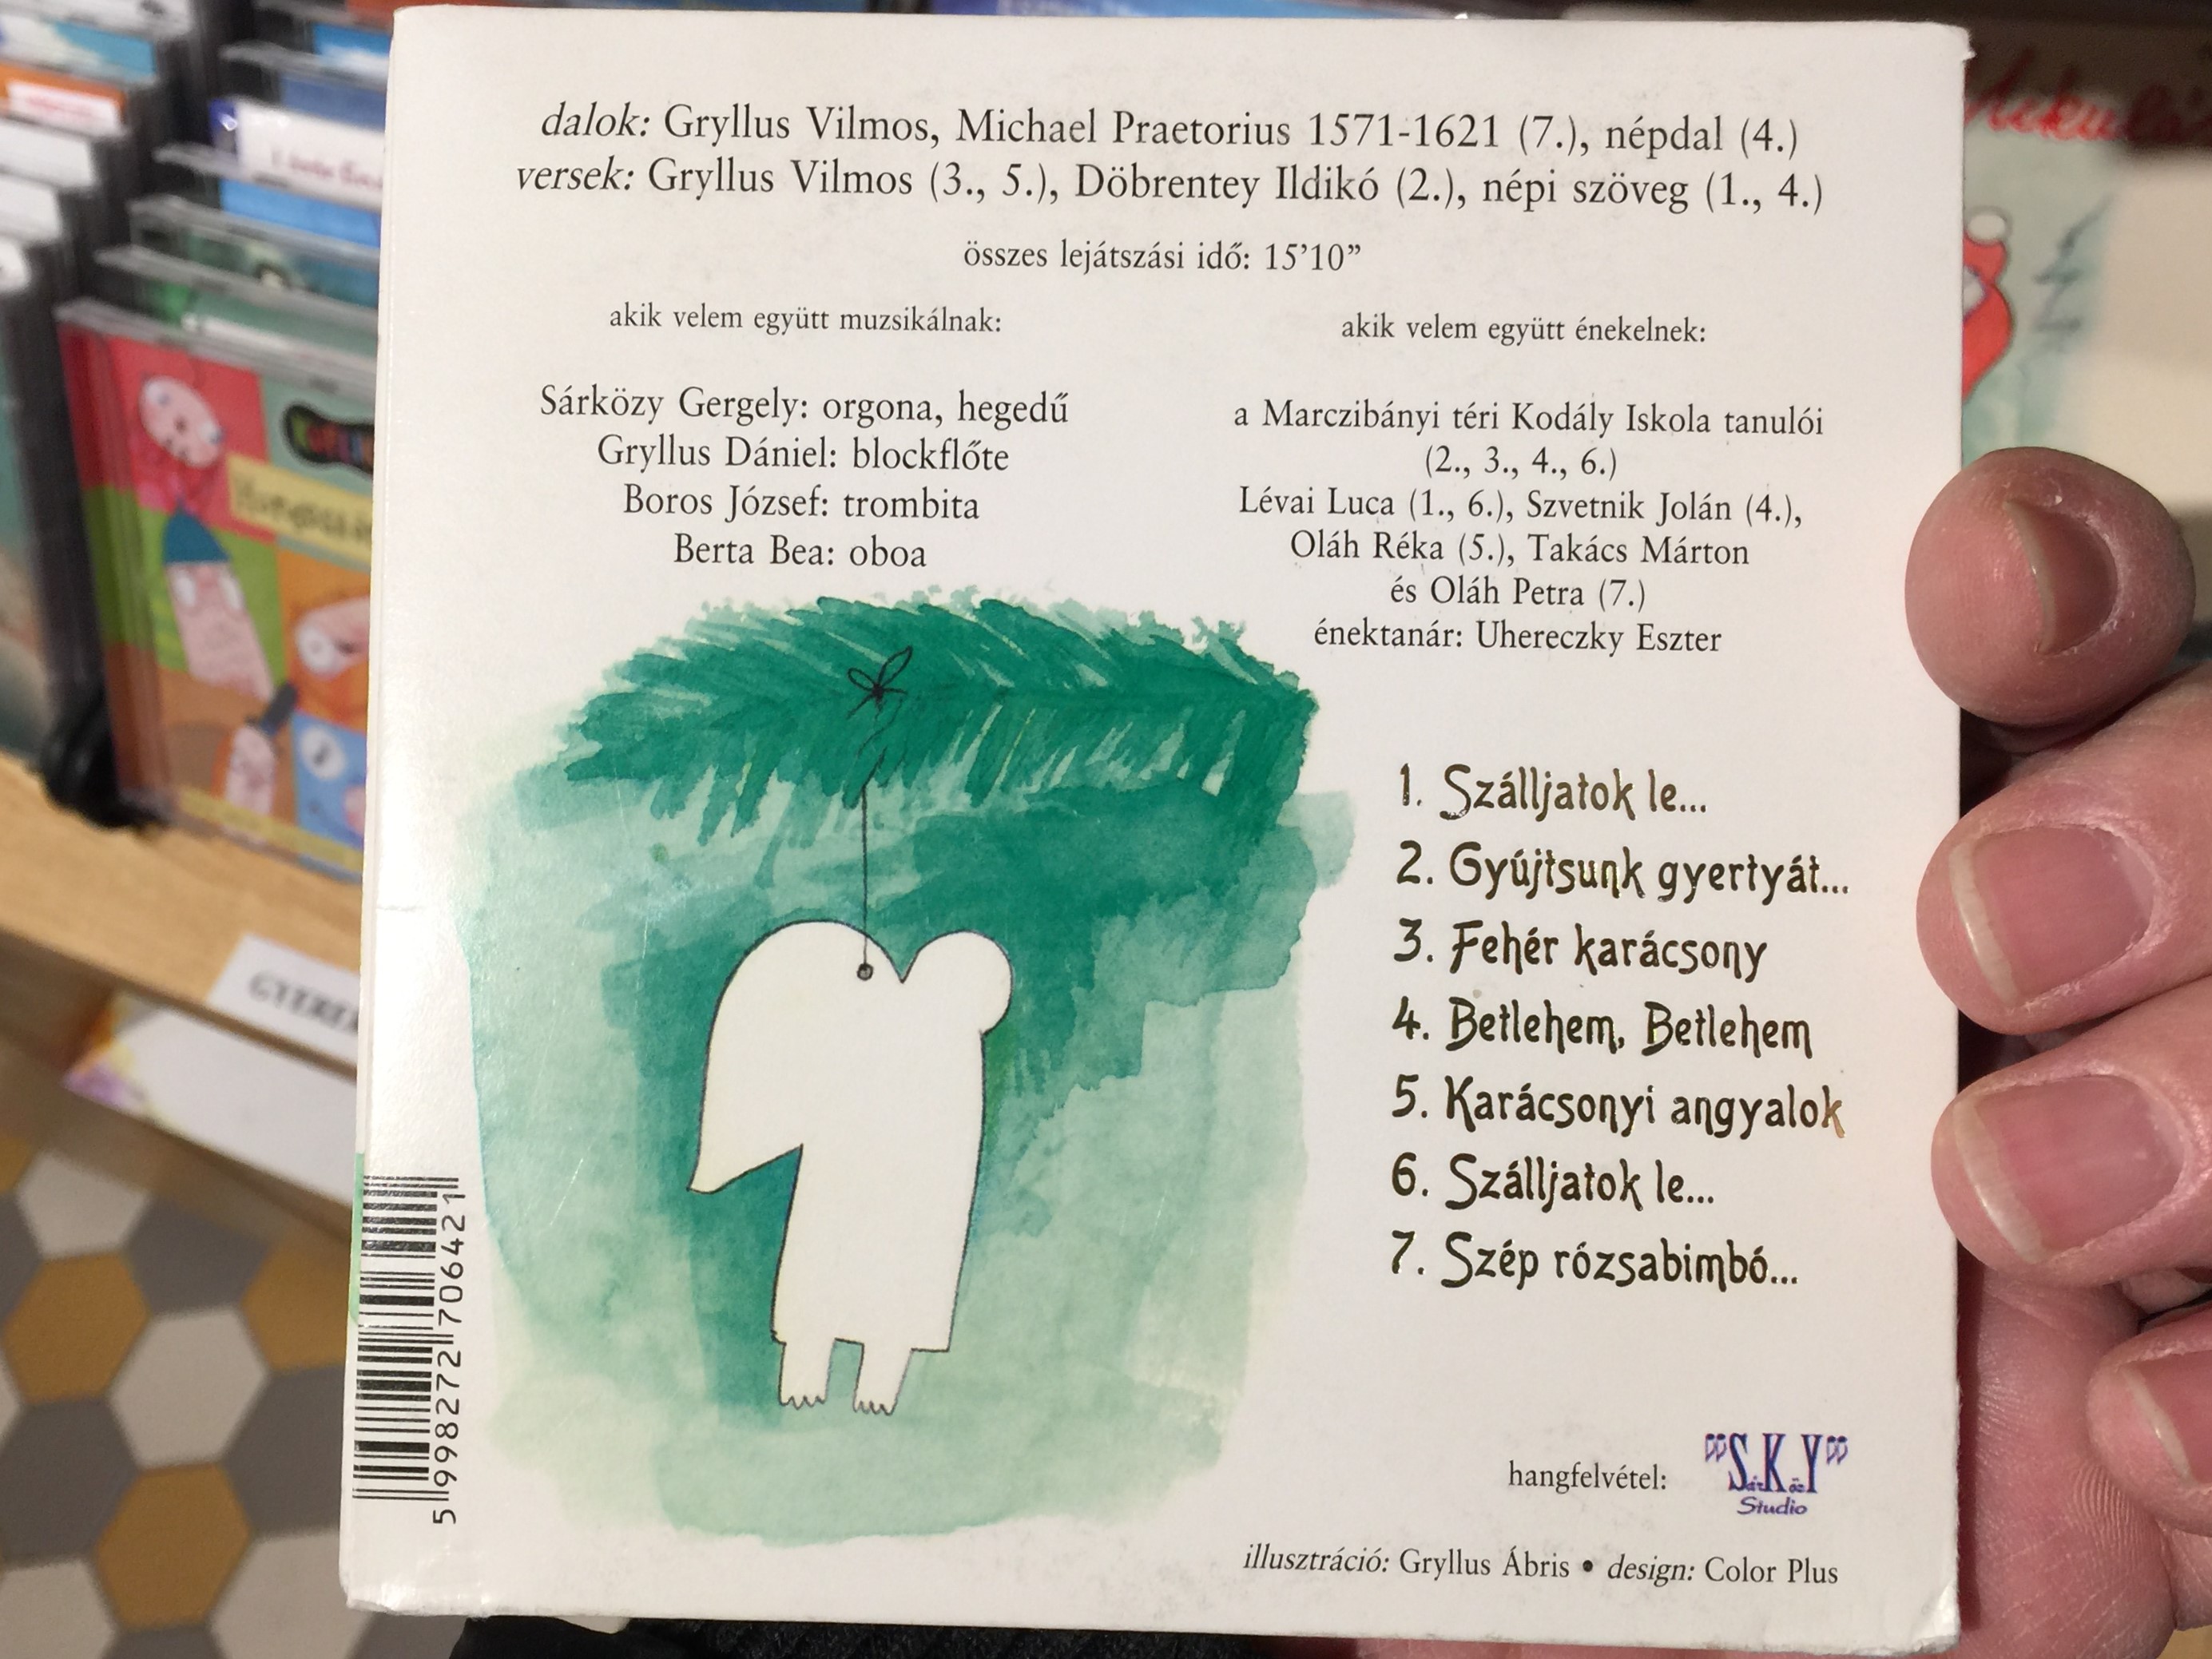 gryllus-vilmos-kar-csonyi-angyalok-treff-audio-cd-2005-trcd-008-2-.jpg